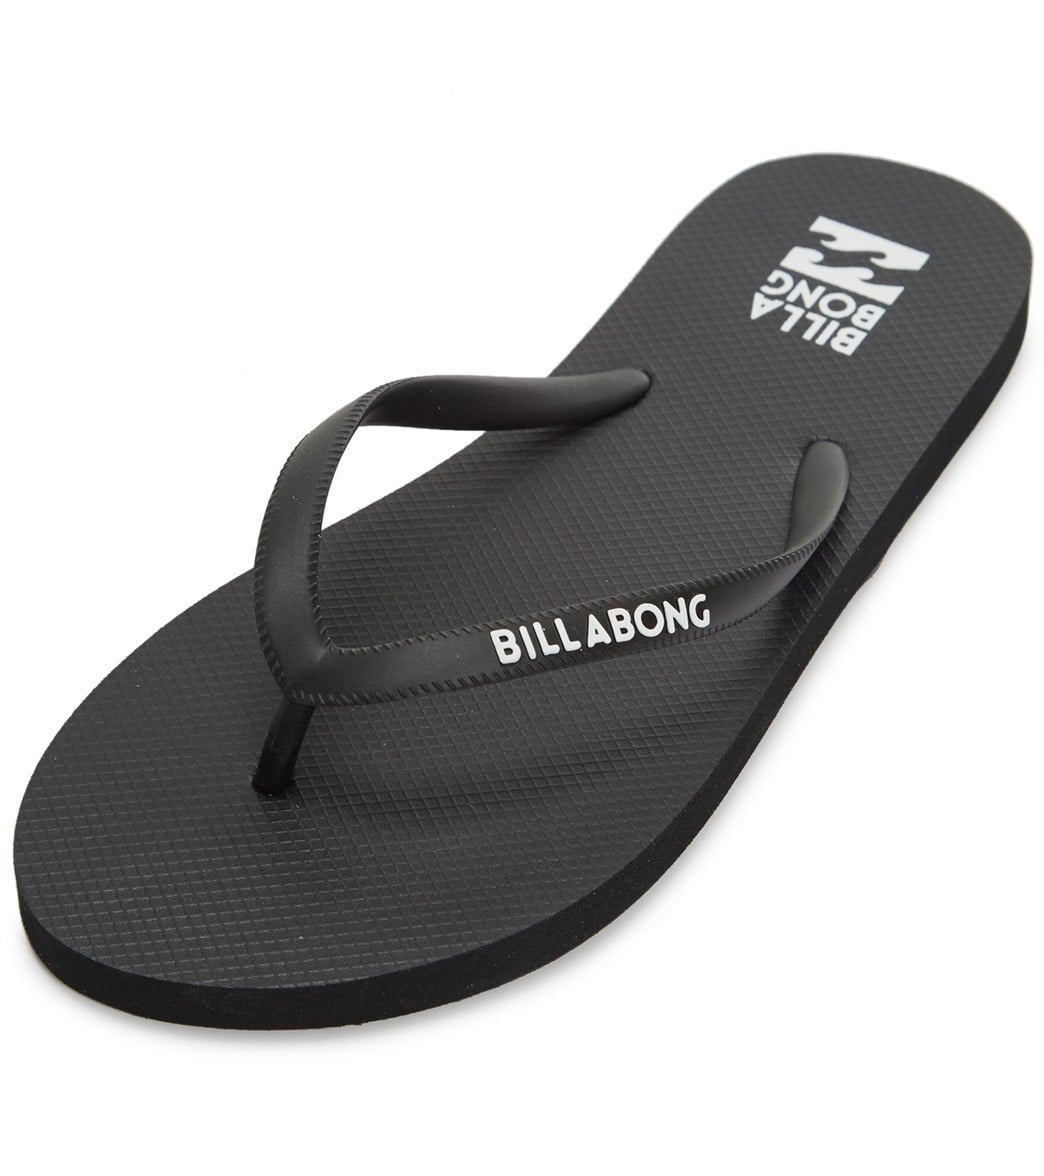 Billabong Women's Dama Flip Flop - Black/White 8 - Swimoutlet.com